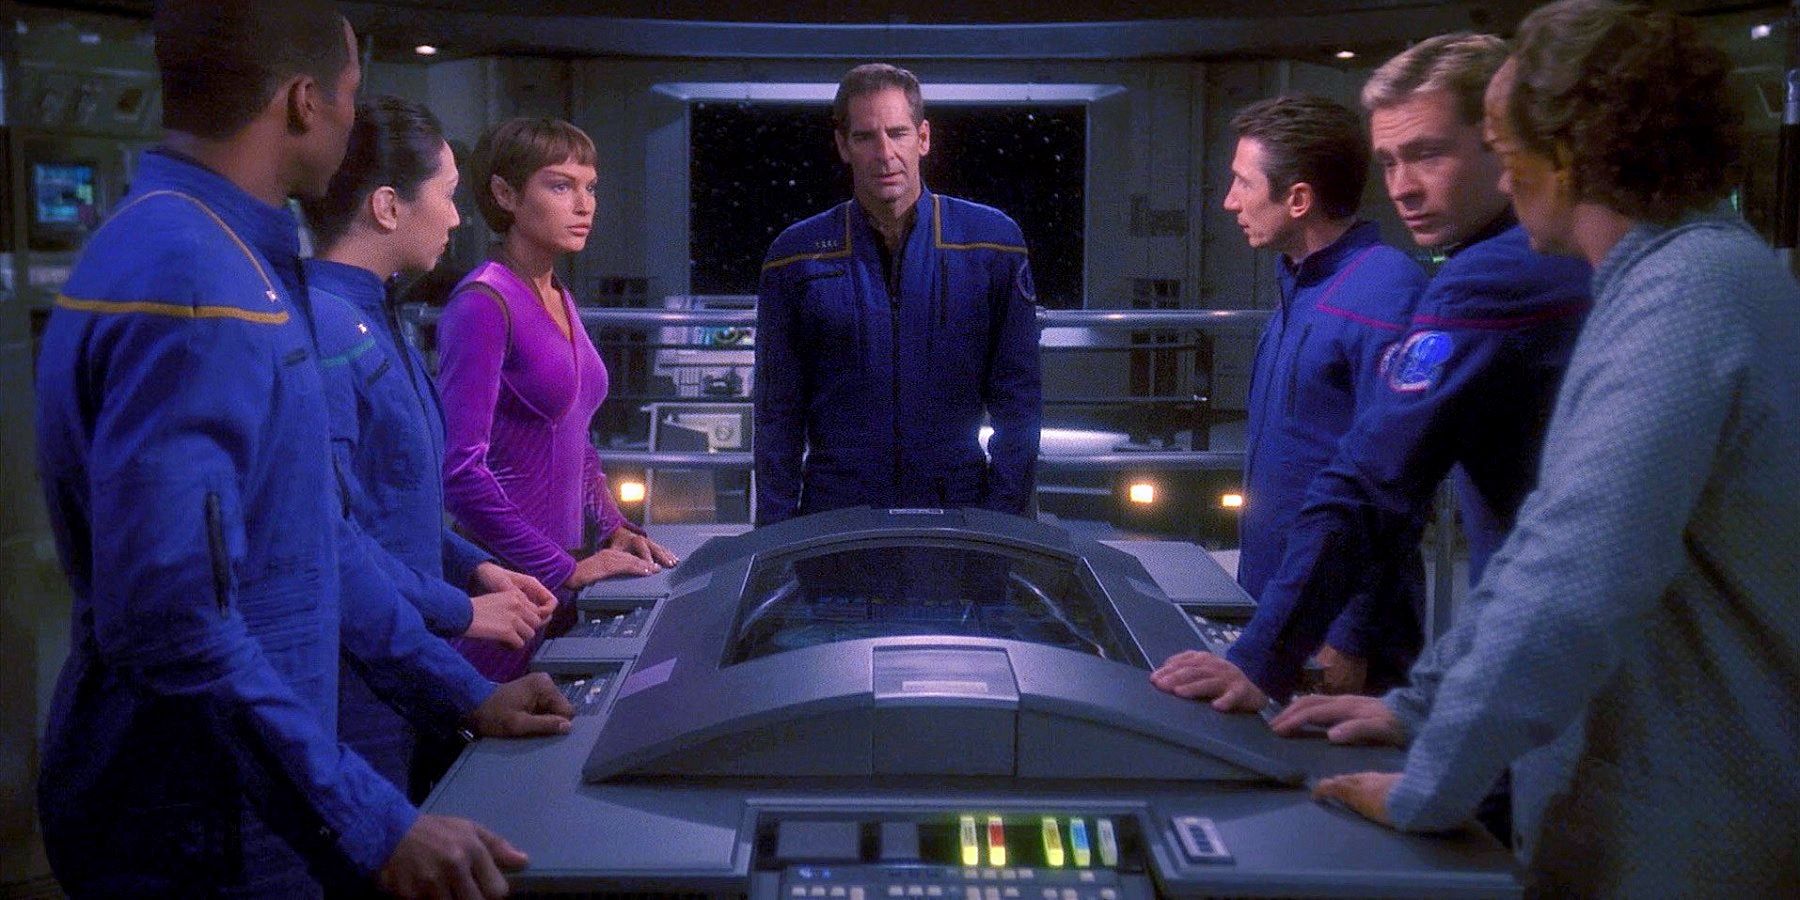 Star Trek Enterprise crew standing around the bridge computer